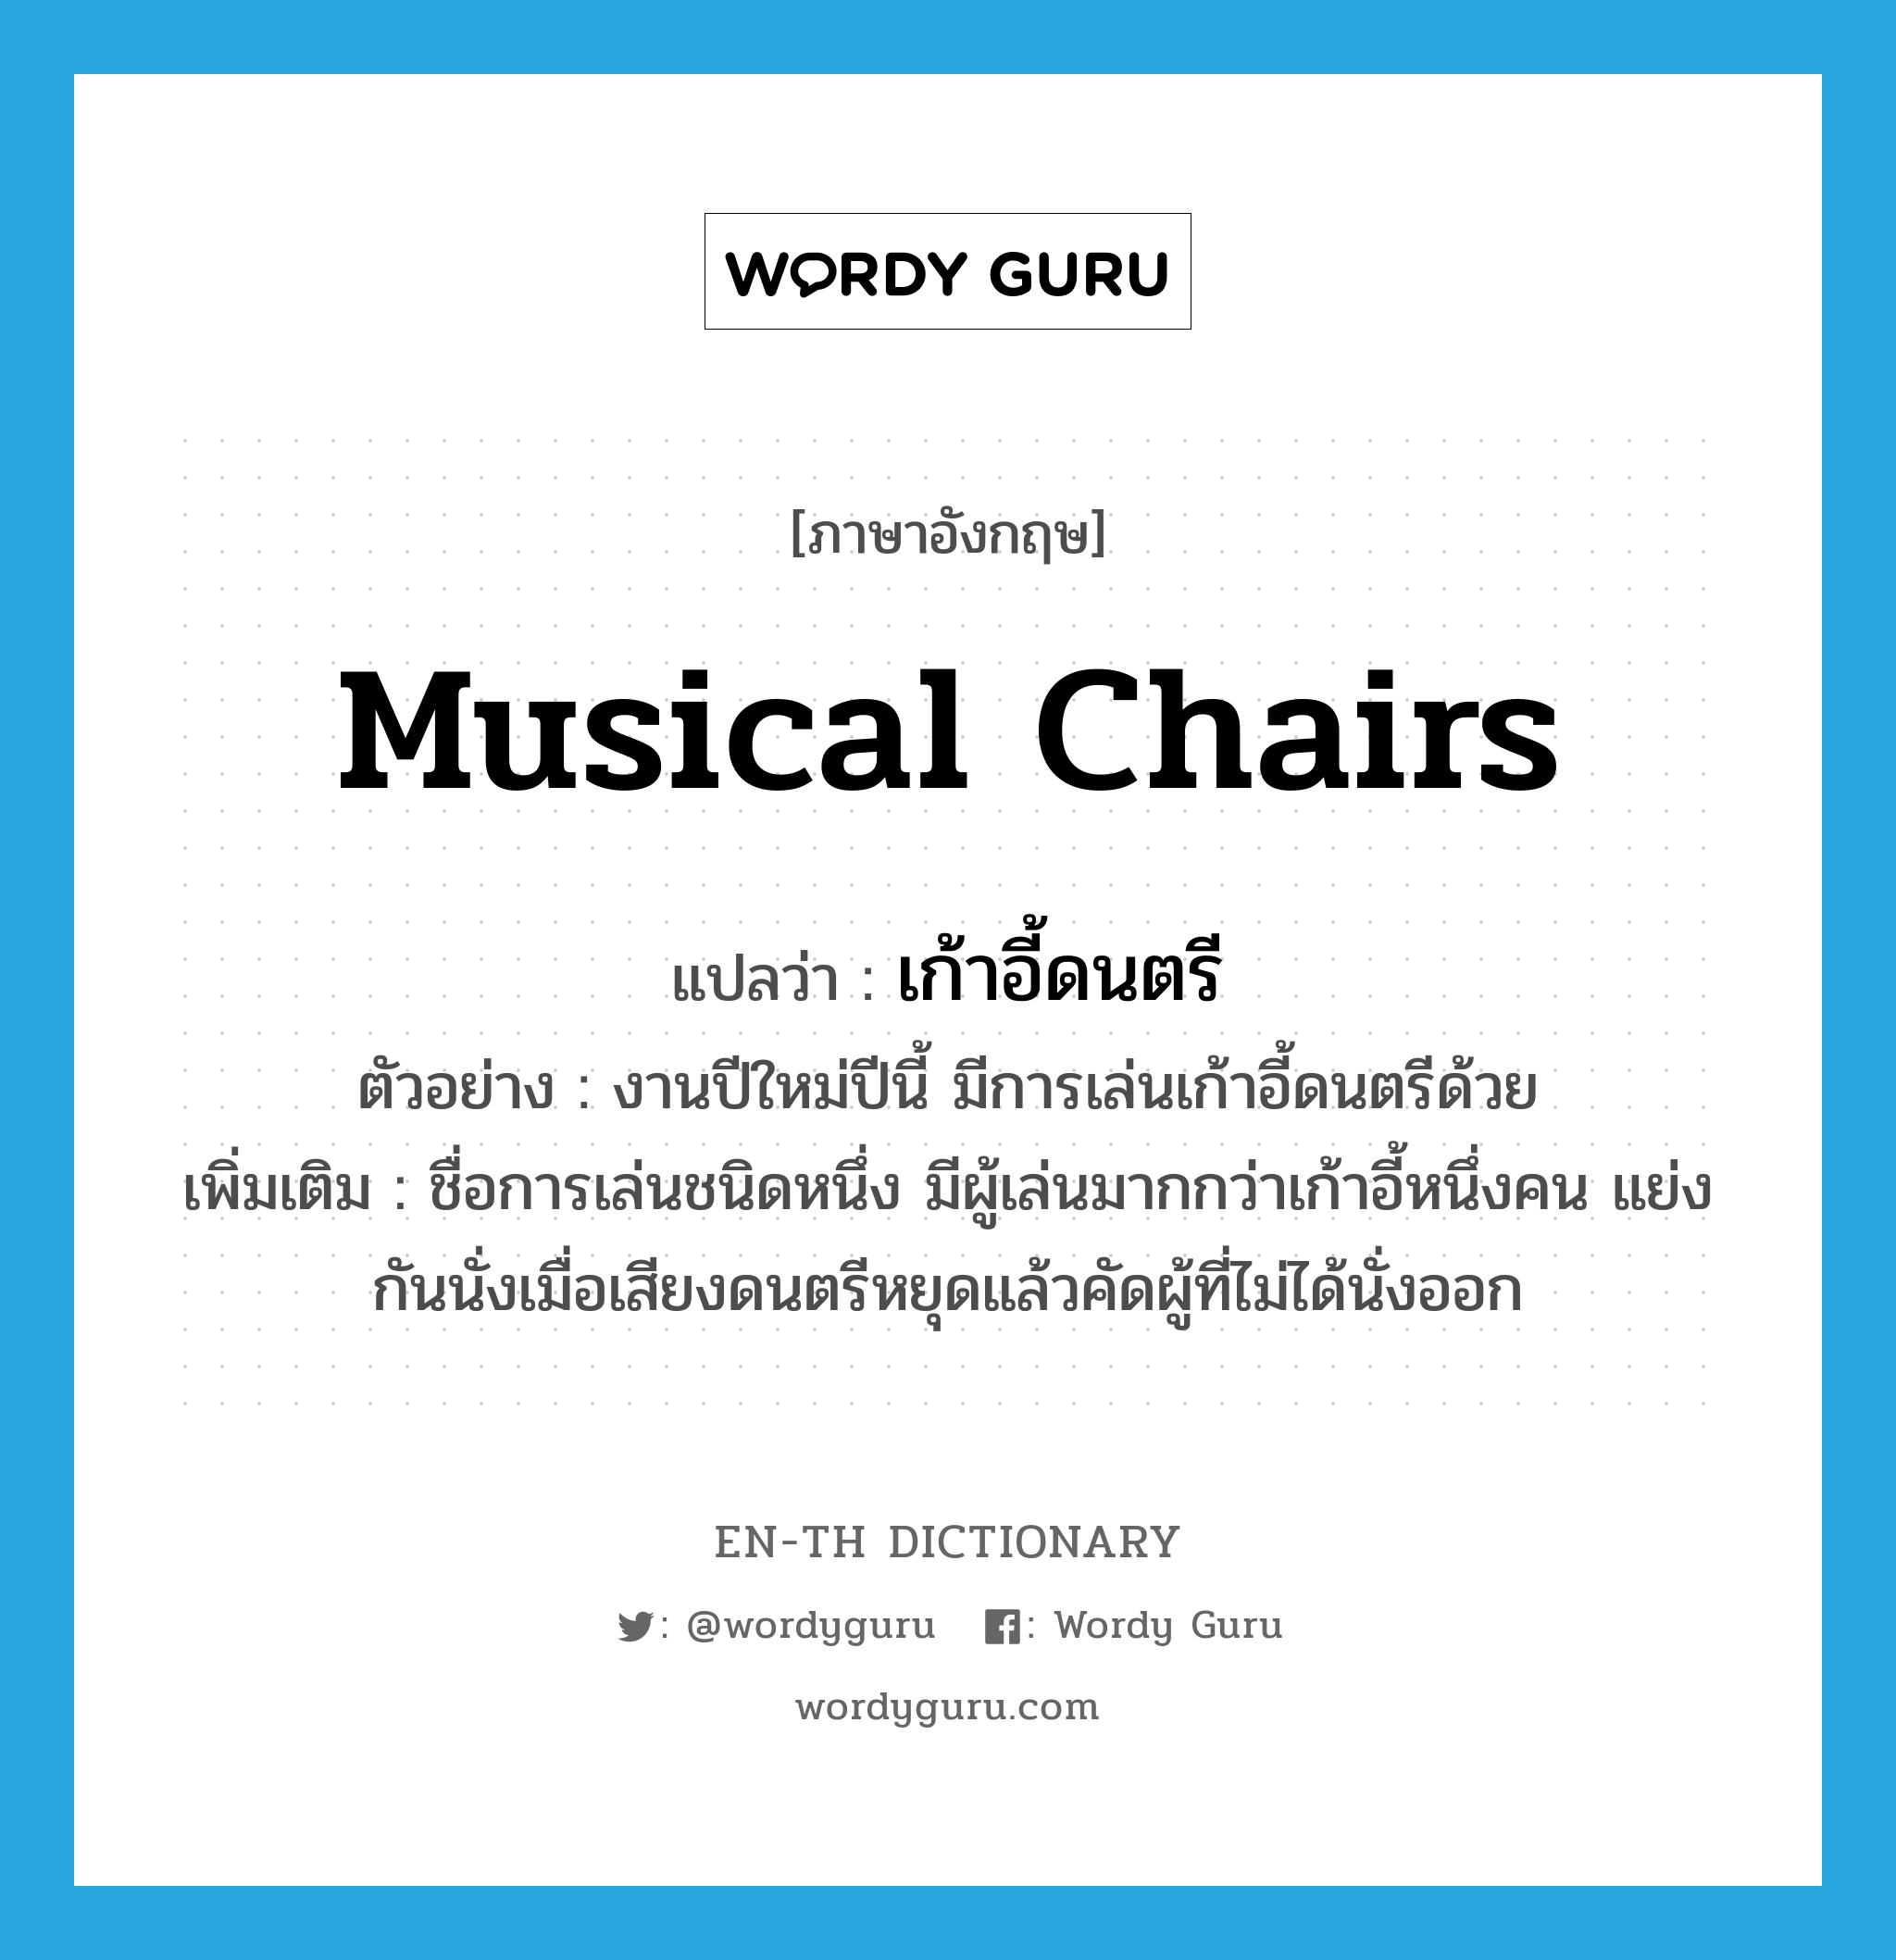 musical chairs แปลว่า?, คำศัพท์ภาษาอังกฤษ musical chairs แปลว่า เก้าอี้ดนตรี ประเภท N ตัวอย่าง งานปีใหม่ปีนี้ มีการเล่นเก้าอี้ดนตรีด้วย เพิ่มเติม ชื่อการเล่นชนิดหนึ่ง มีผู้เล่นมากกว่าเก้าอี้หนึ่งคน แย่งกันนั่งเมื่อเสียงดนตรีหยุดแล้วคัดผู้ที่ไม่ได้นั่งออก หมวด N